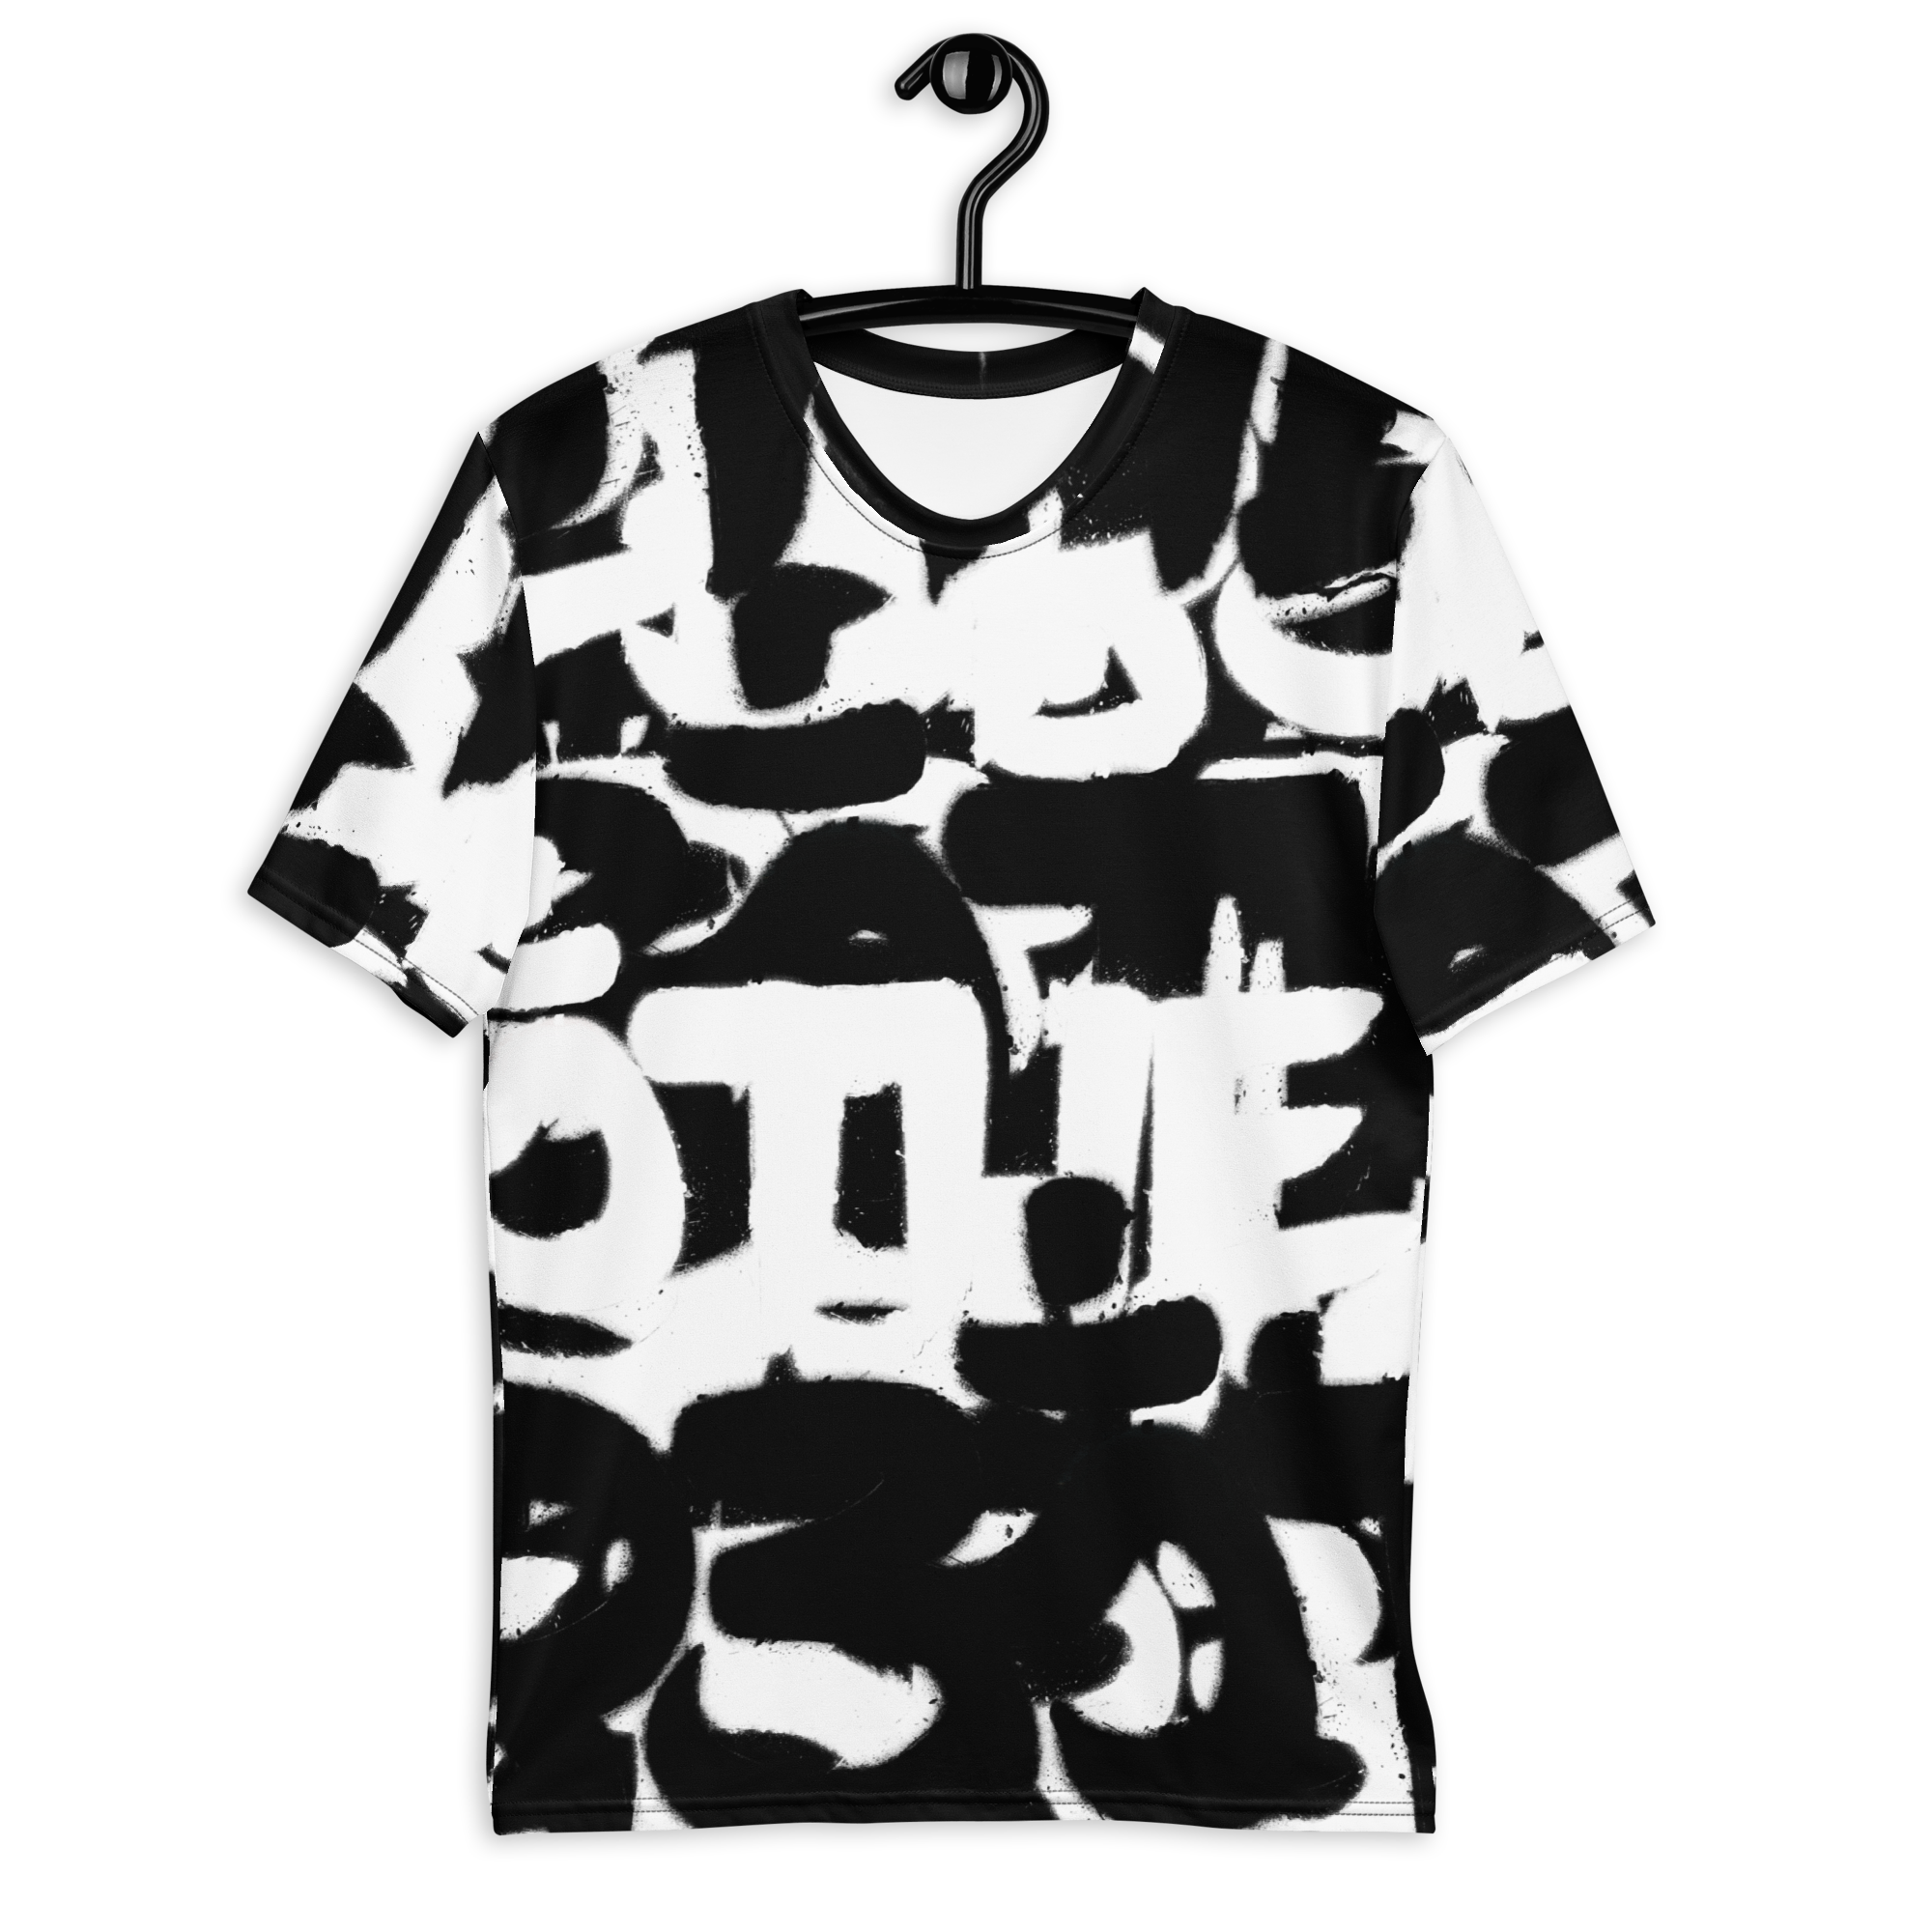 Black T-shirt with graffiti print